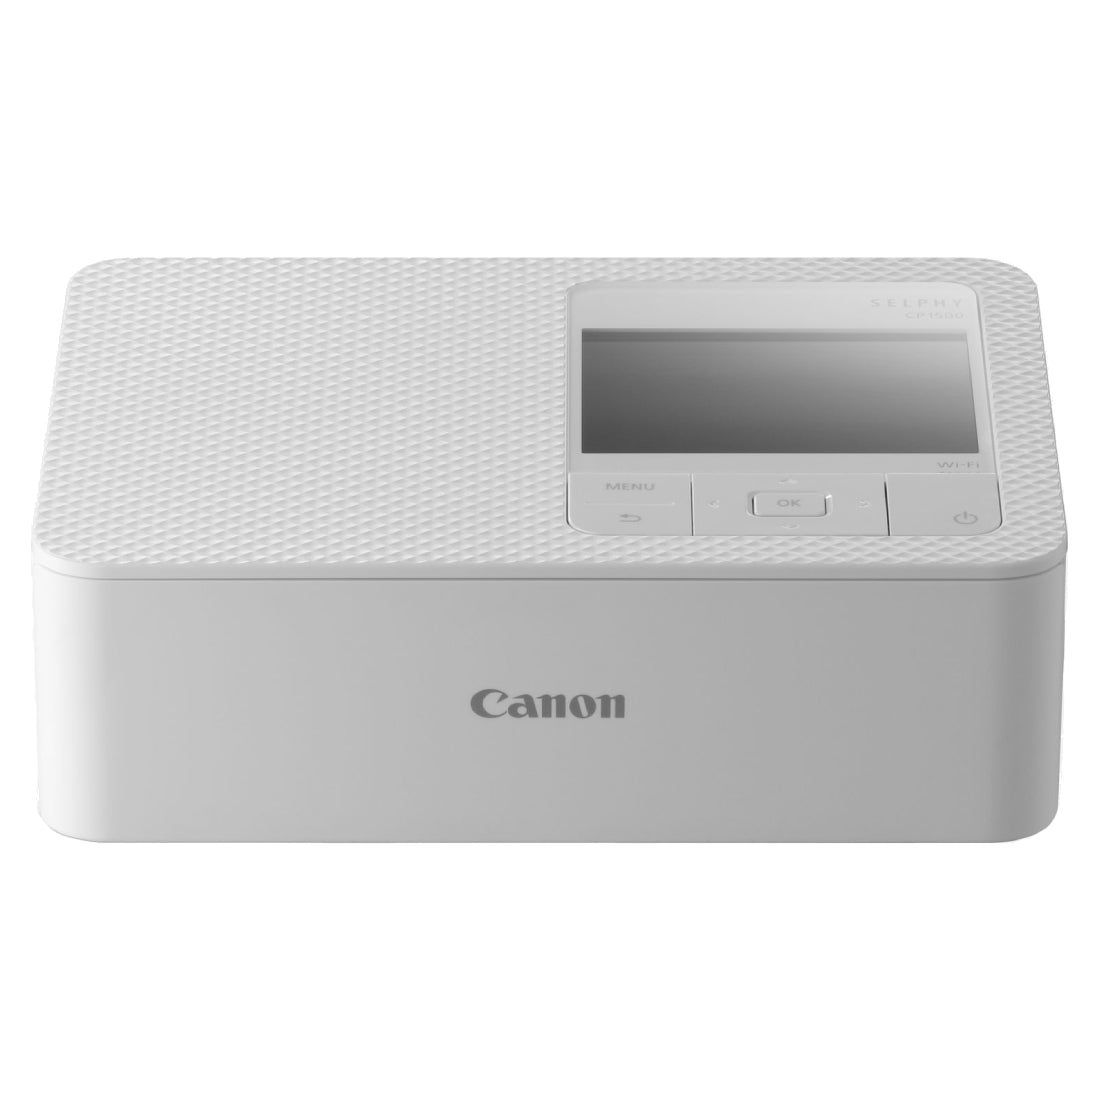 Canon SELPHY CP1500 Printer - White - طابعة - Store 974 | ستور ٩٧٤